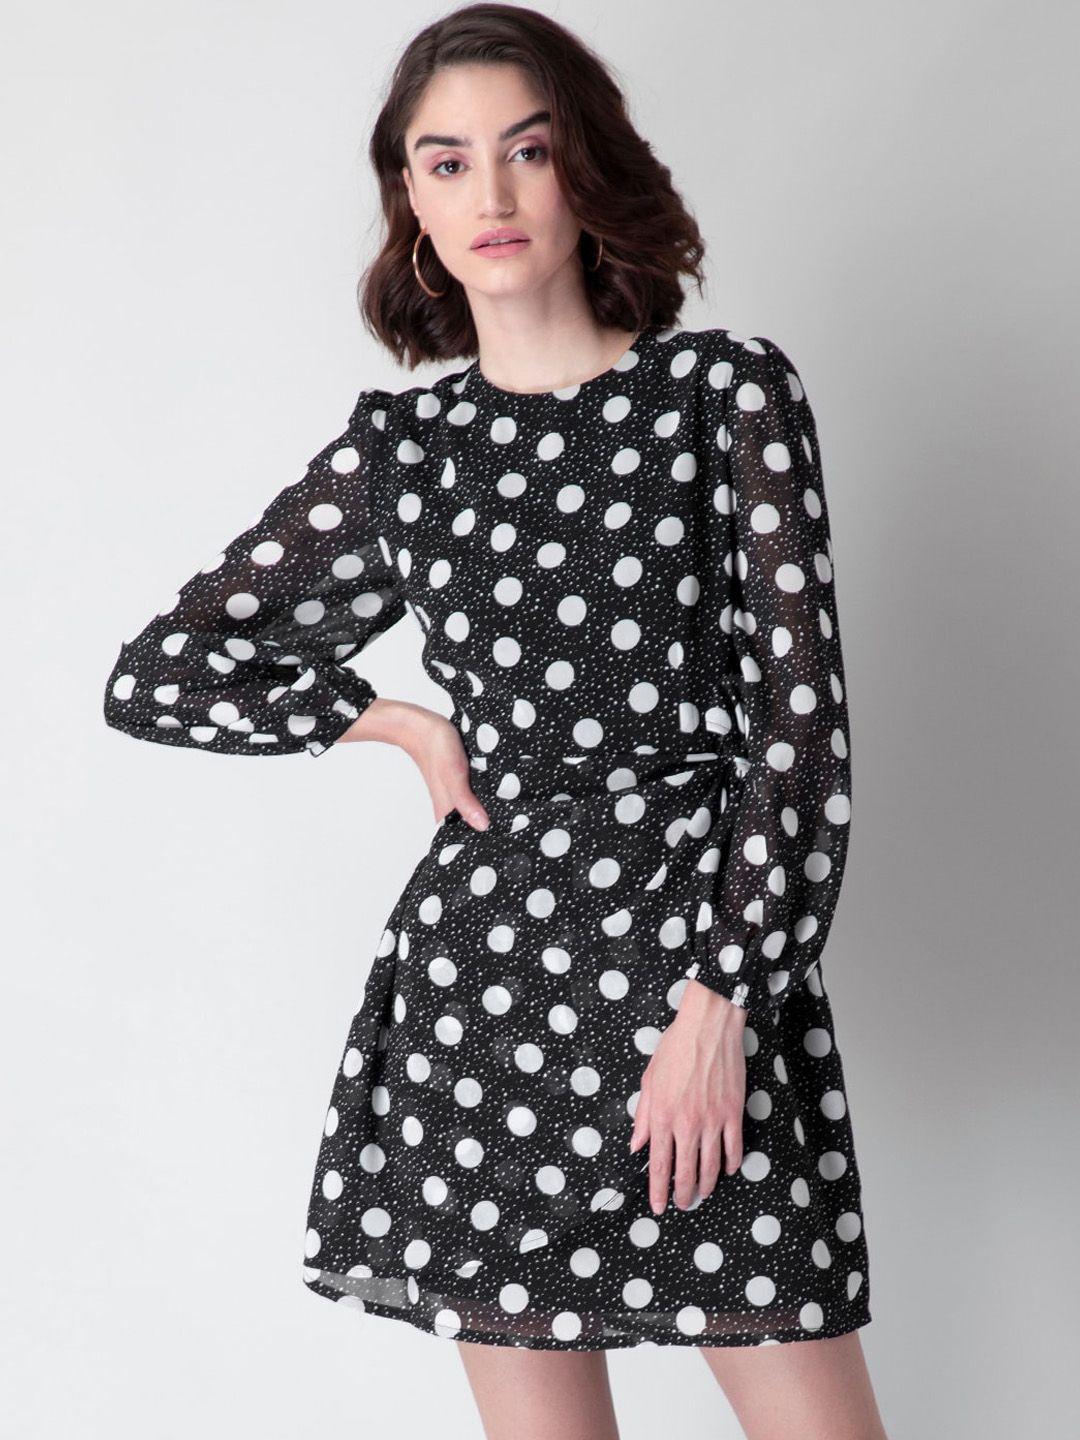 faballey black & white polka dot printed dress